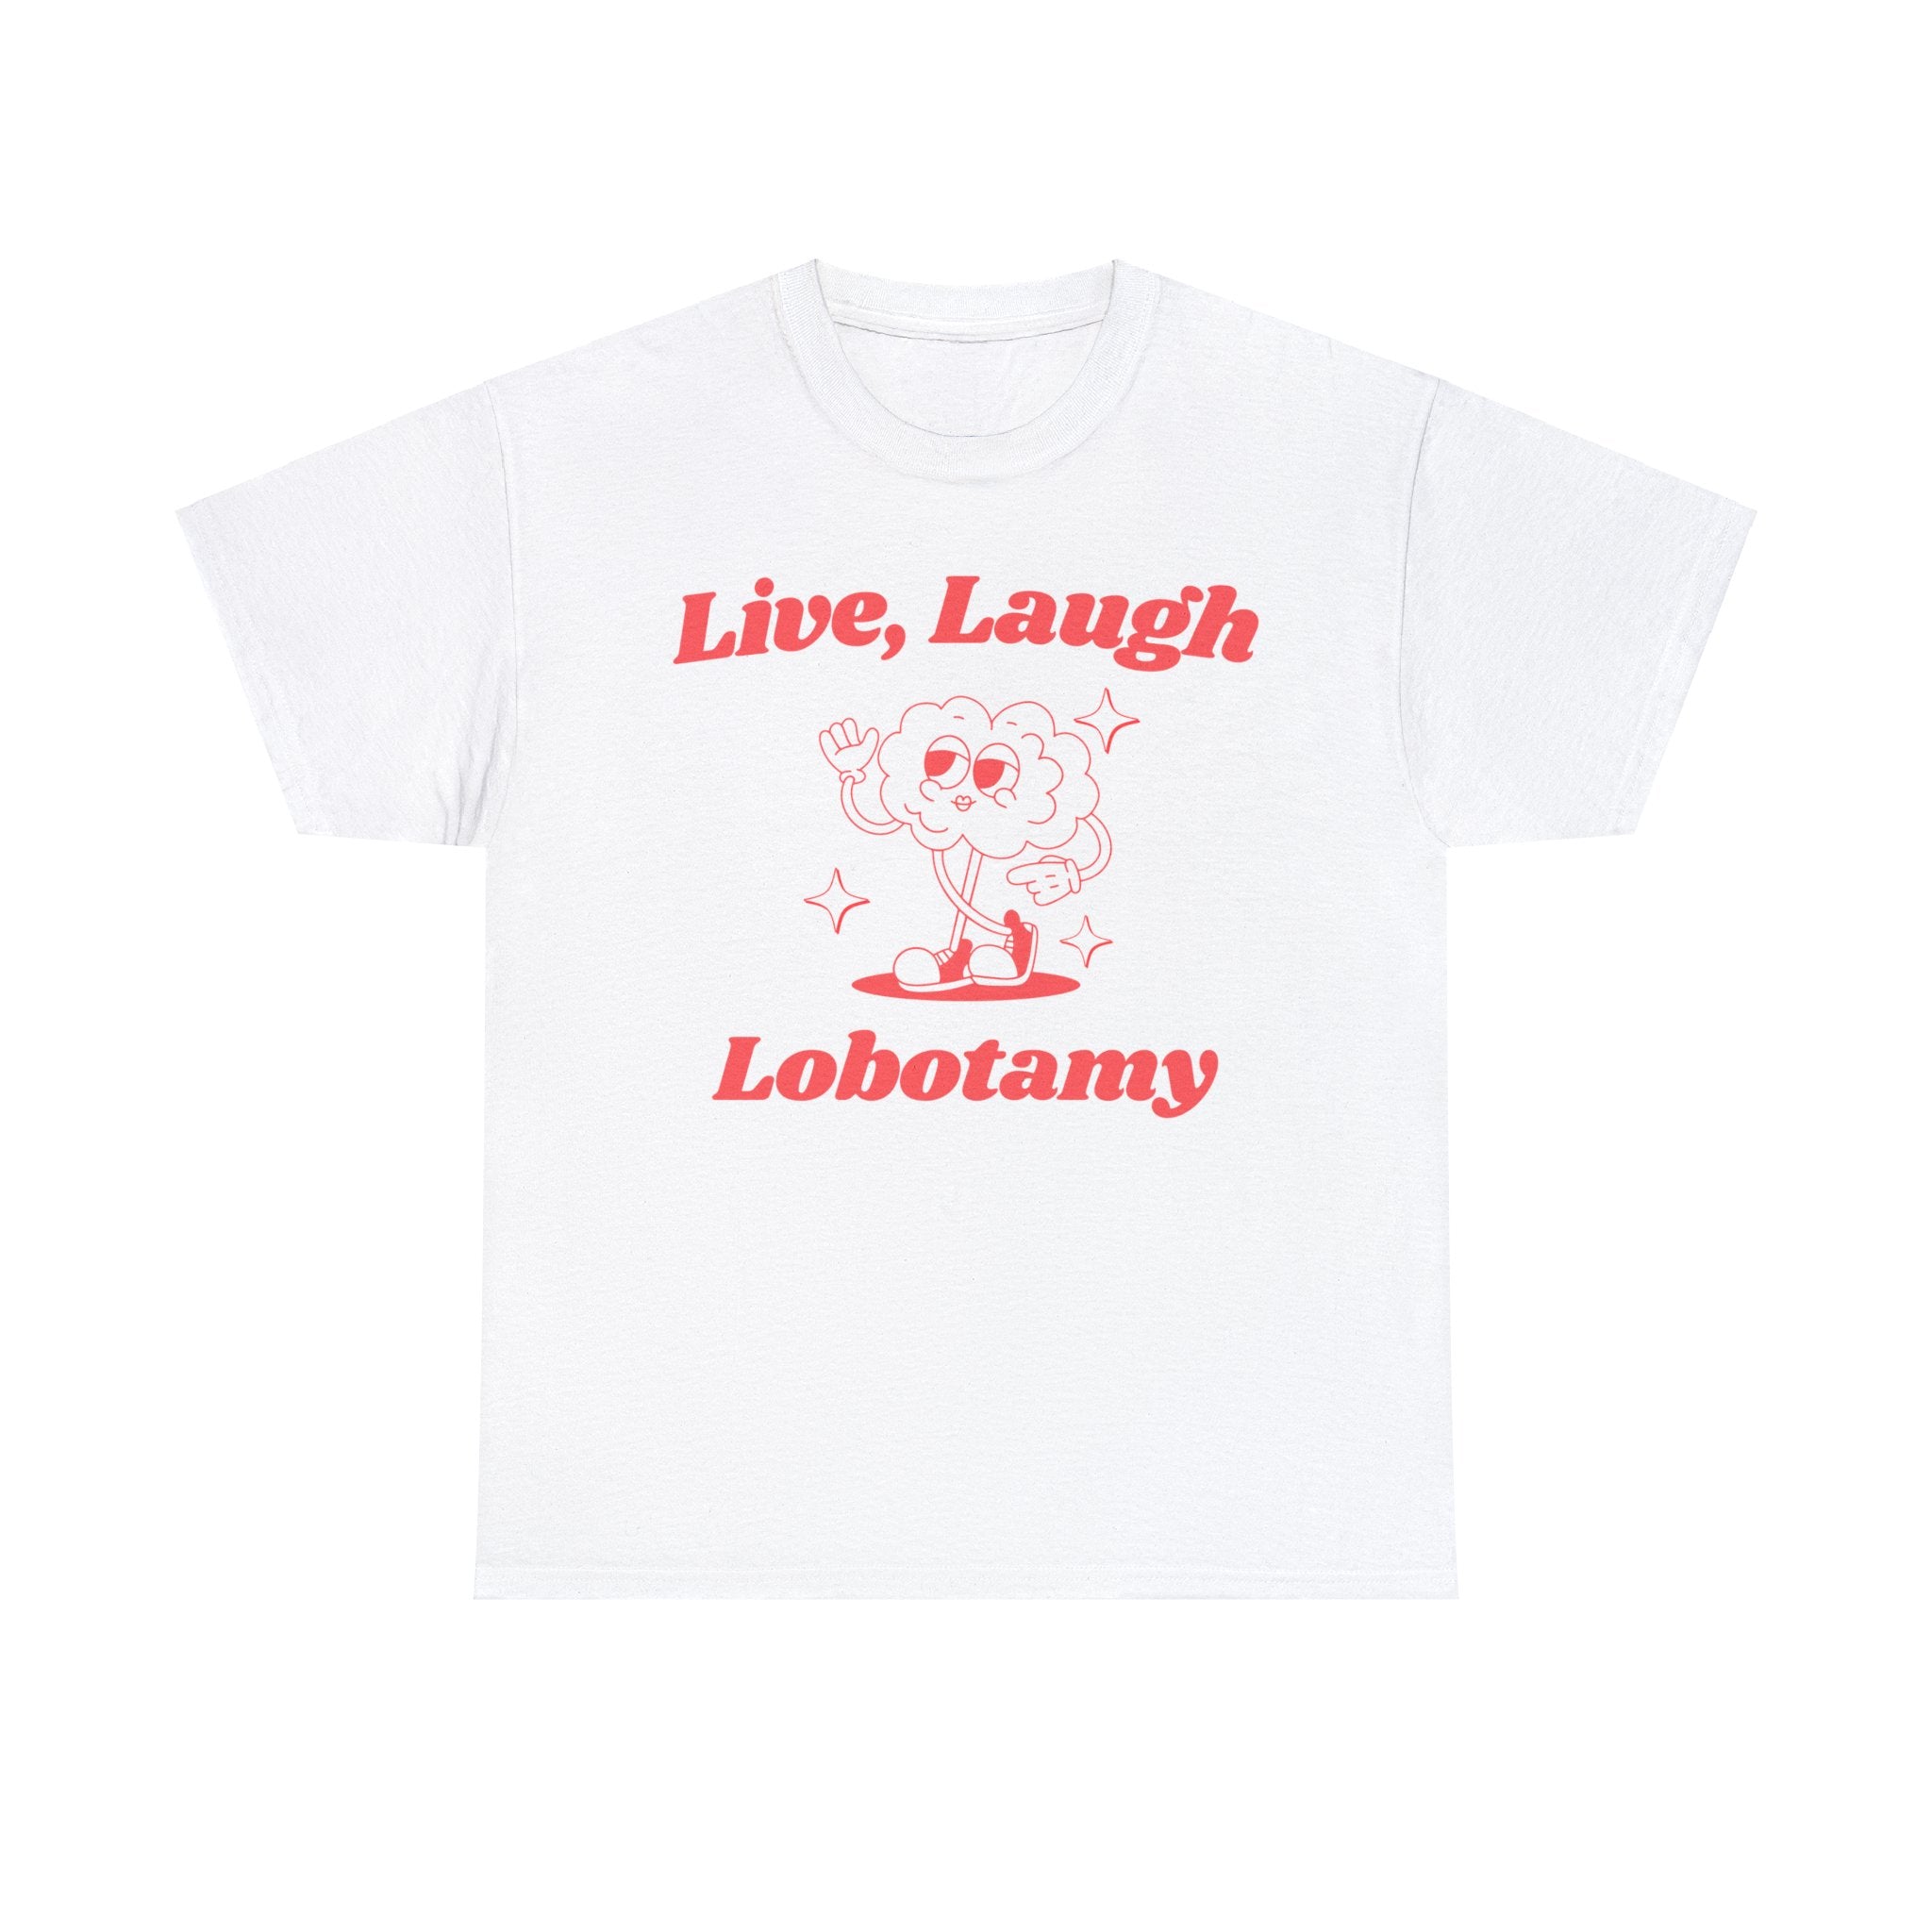 Live, Laugh, Lobotomy funny shirt | funny saying shirt | graphic tees | vintage shirt | sarcastic t-shirt | retro cartoon shirt | meme shirt